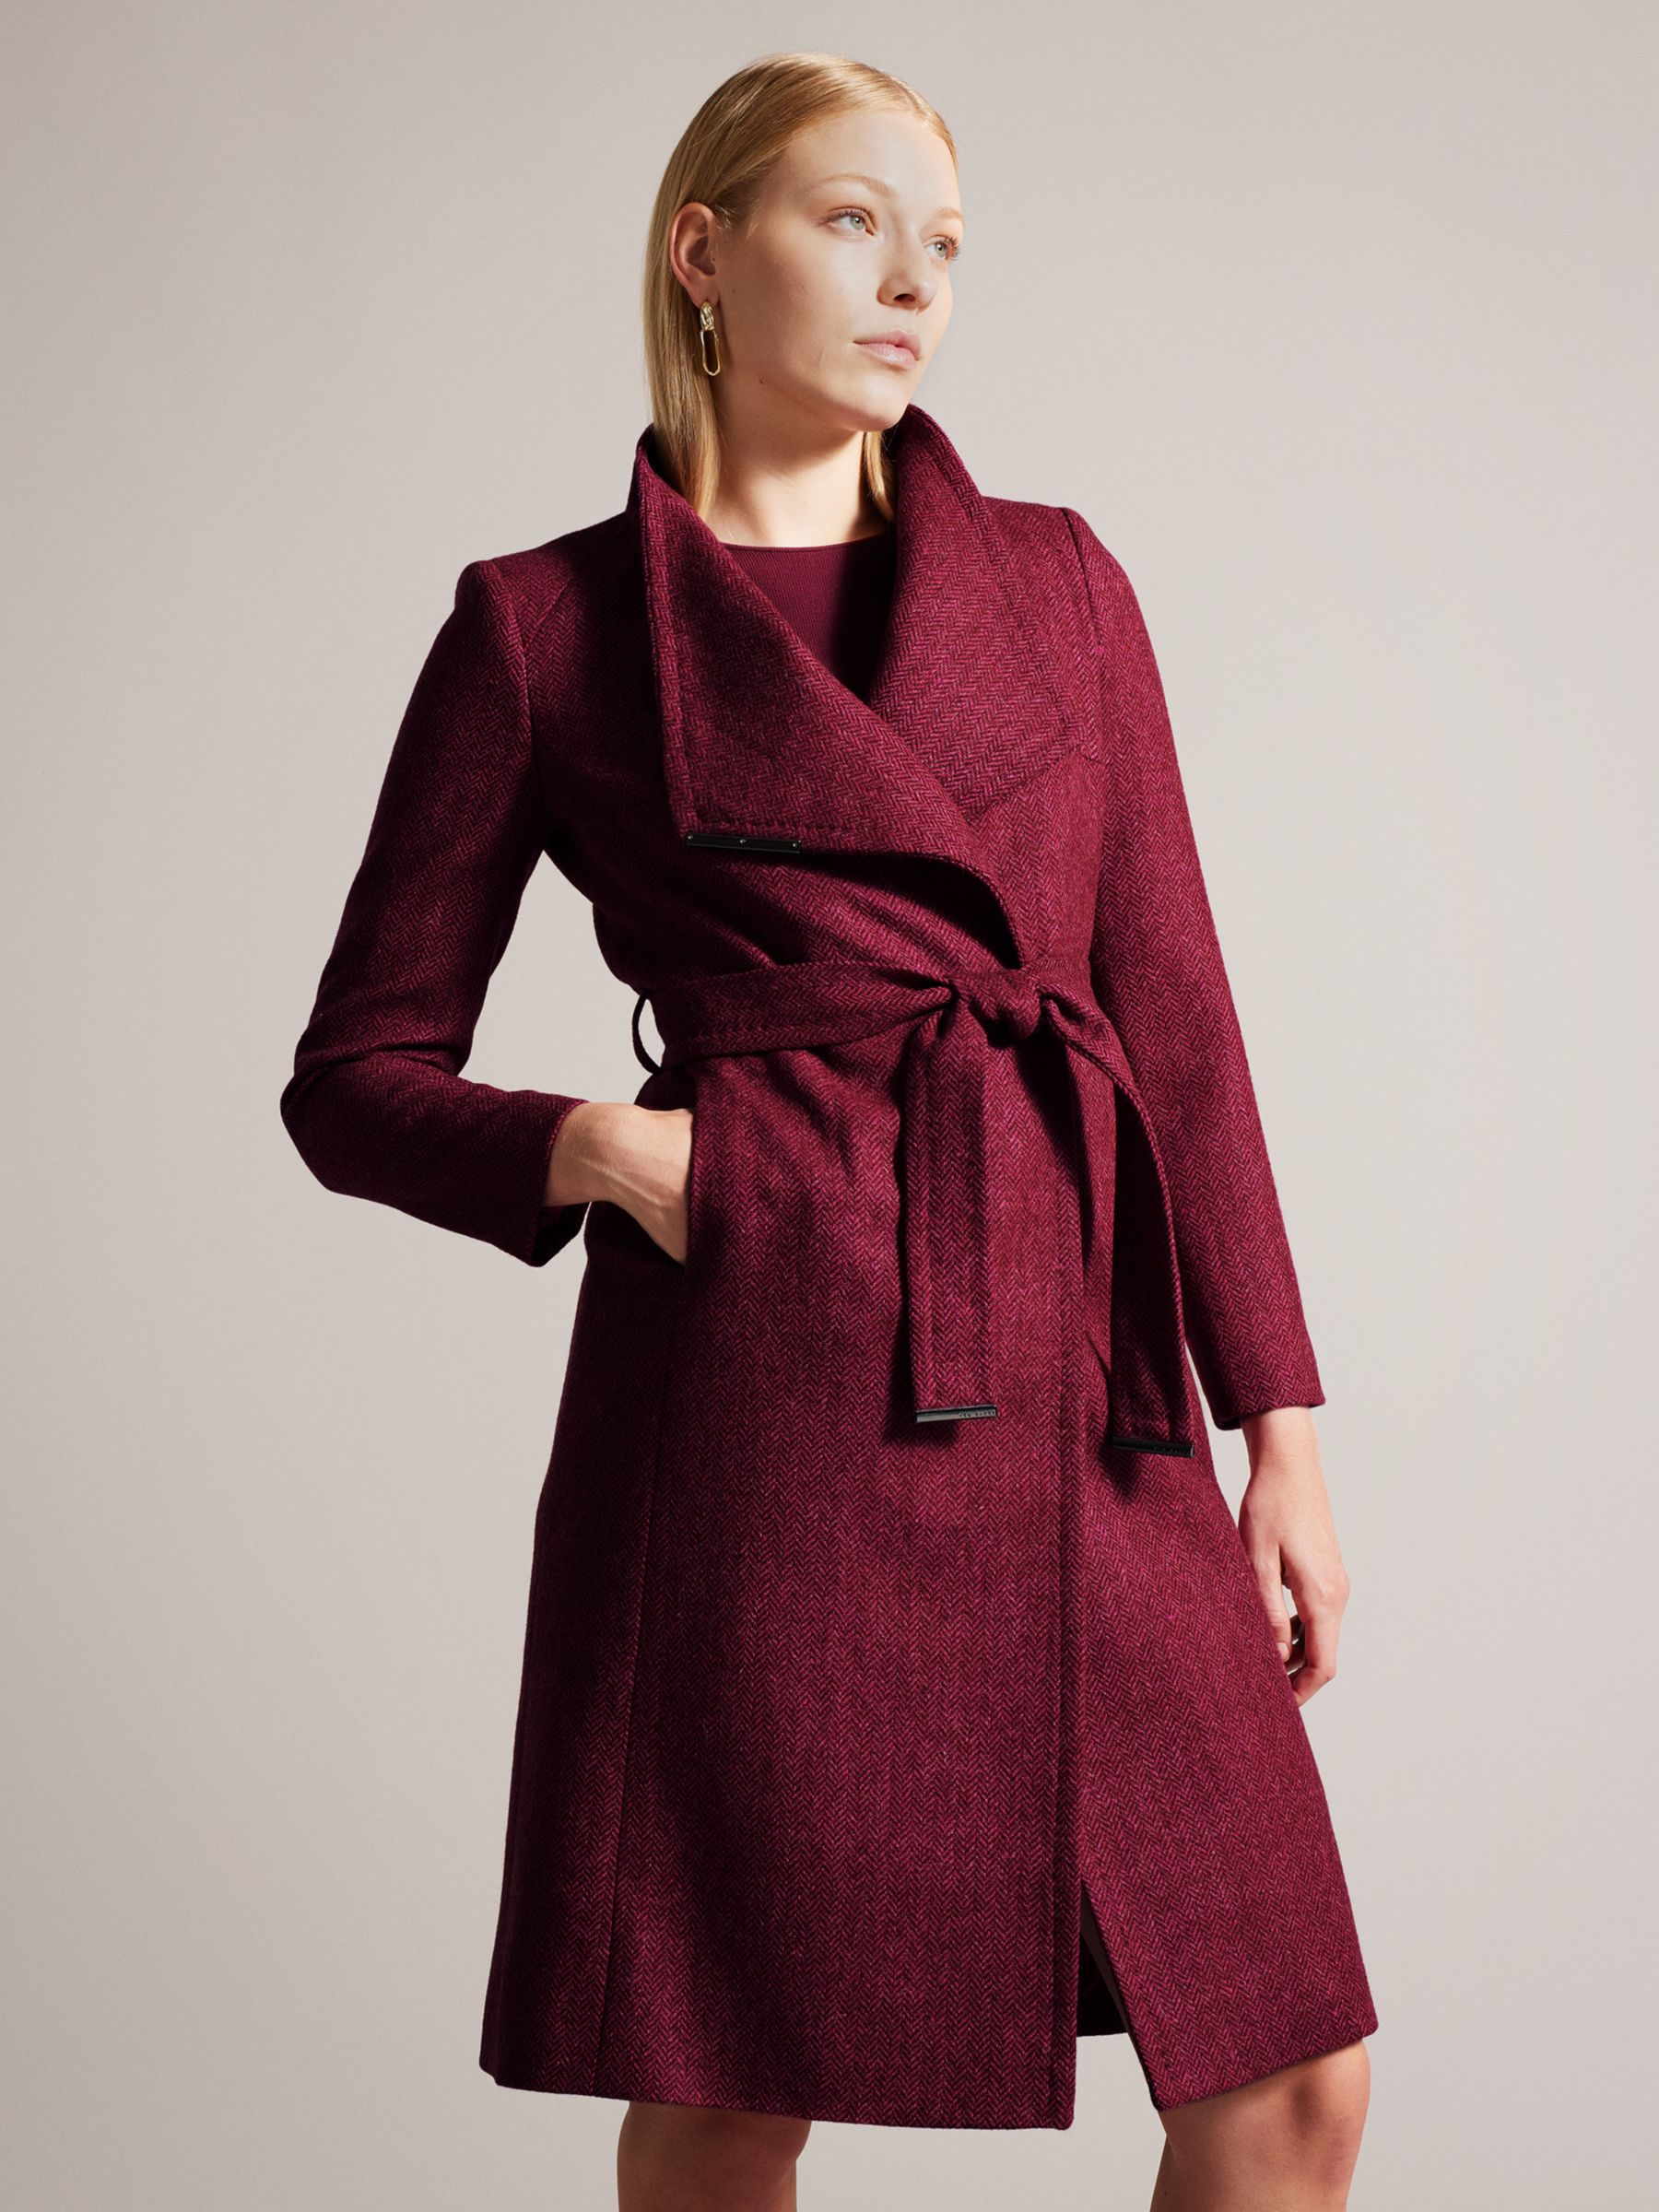 Ted Baker Roseane Wool Coat, Pink Hot at John Lewis & Partners